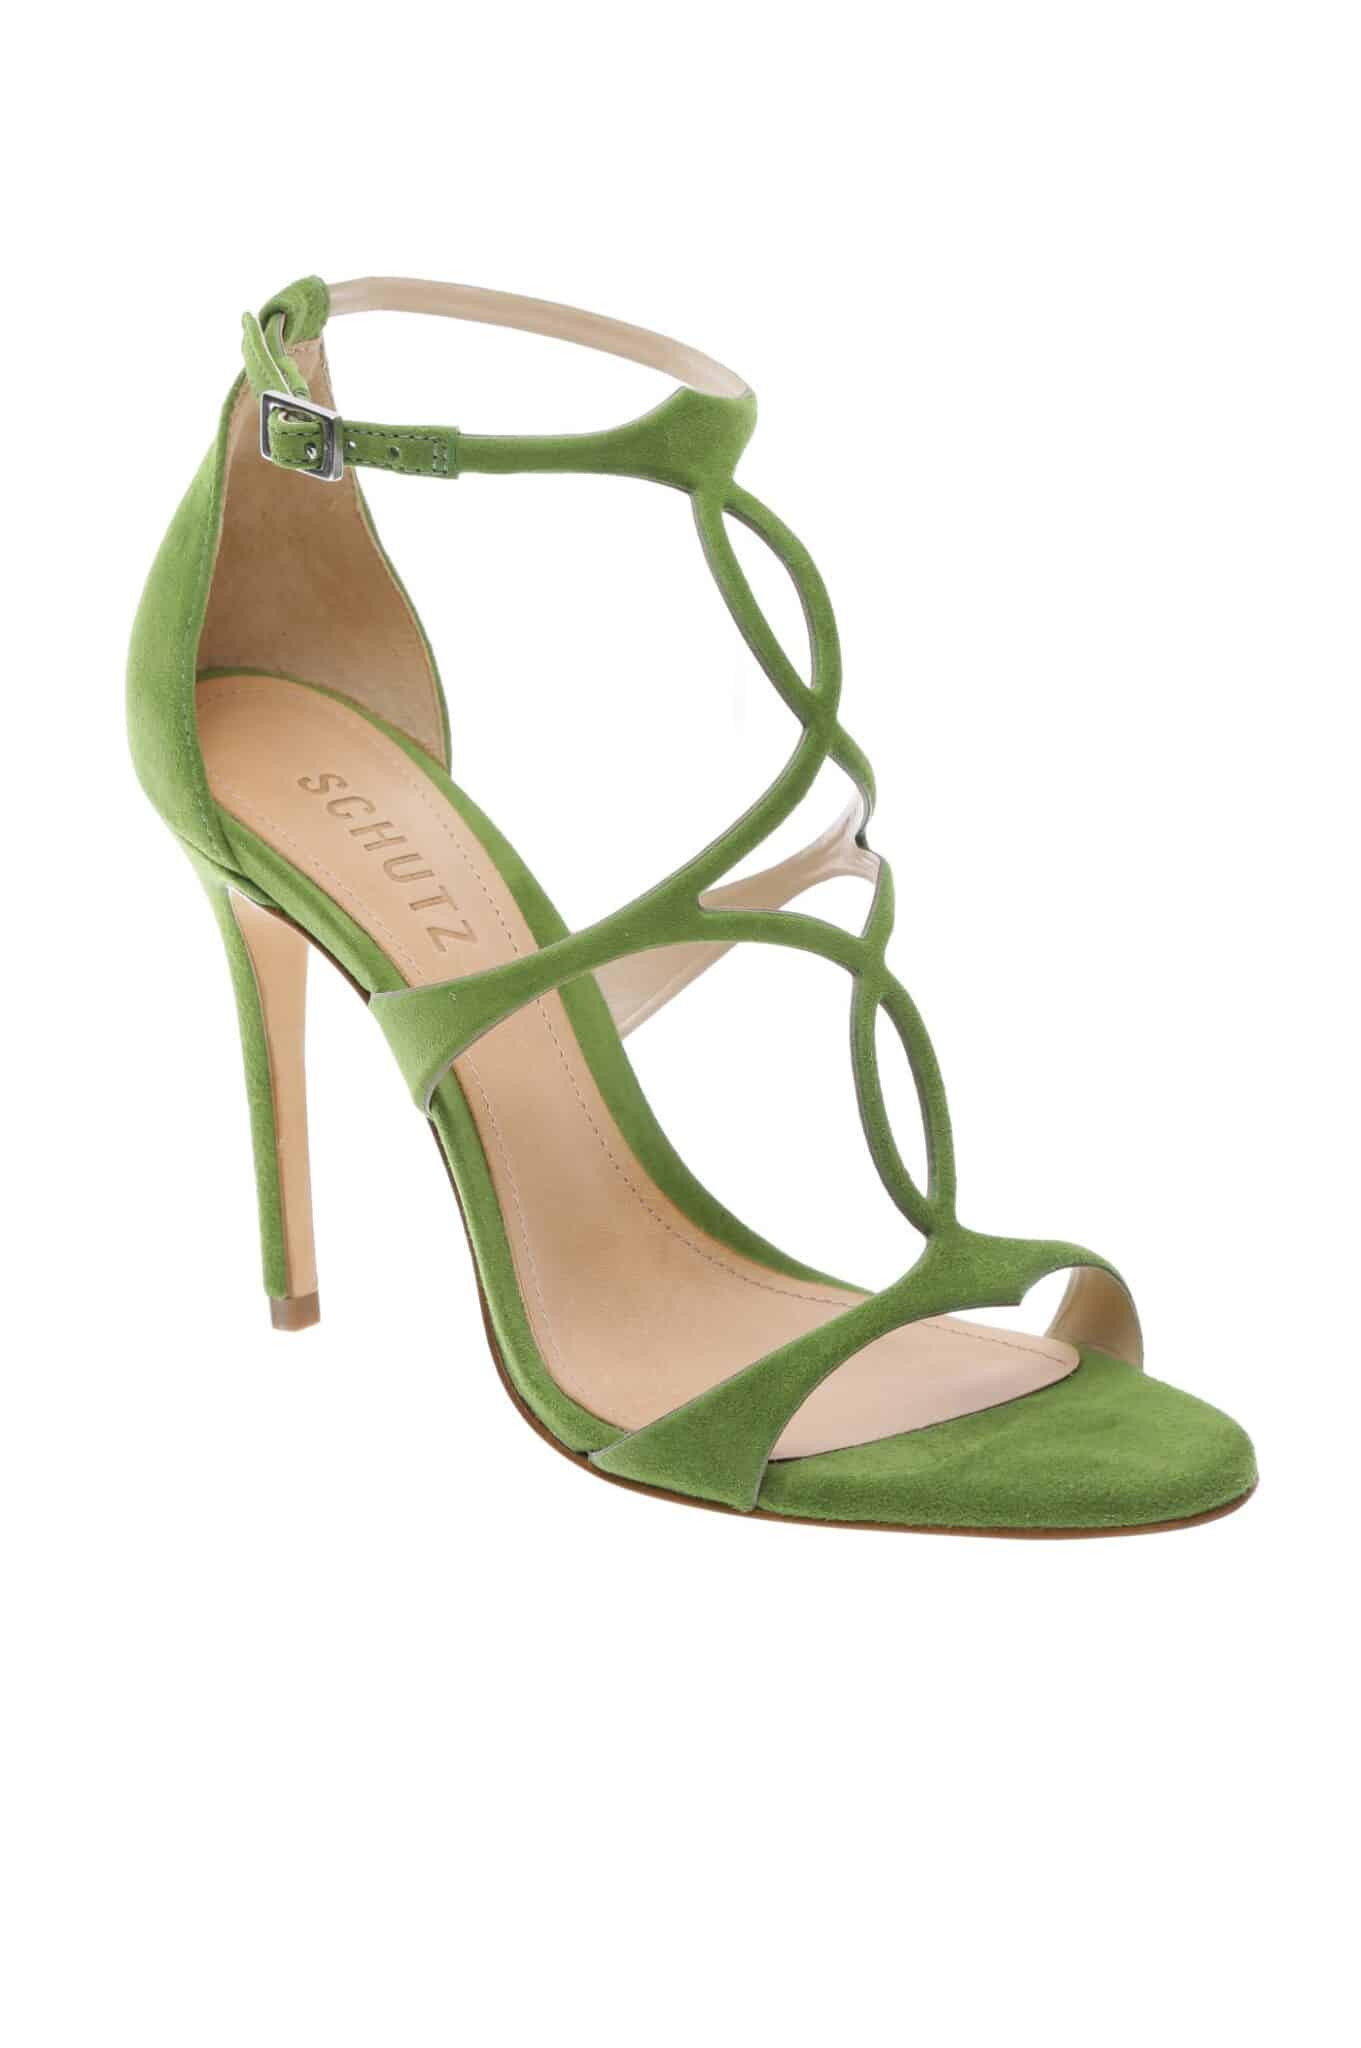 Green suede leather comfortable evening sandals - SCHUTZ